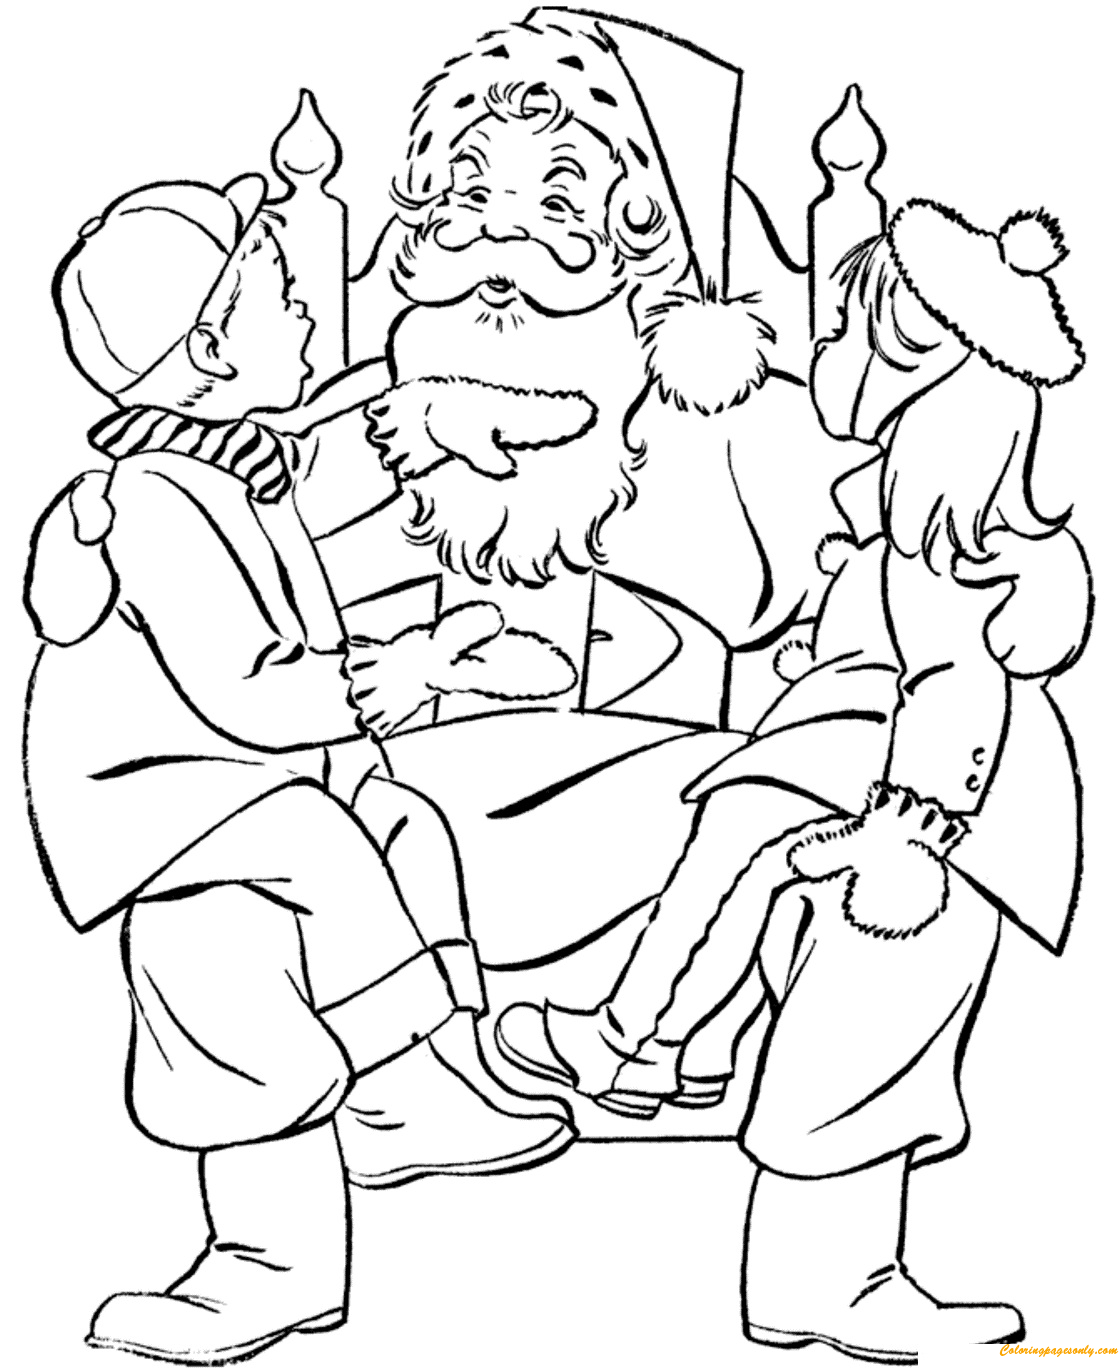 Papai Noel adora crianças from Papai Noel